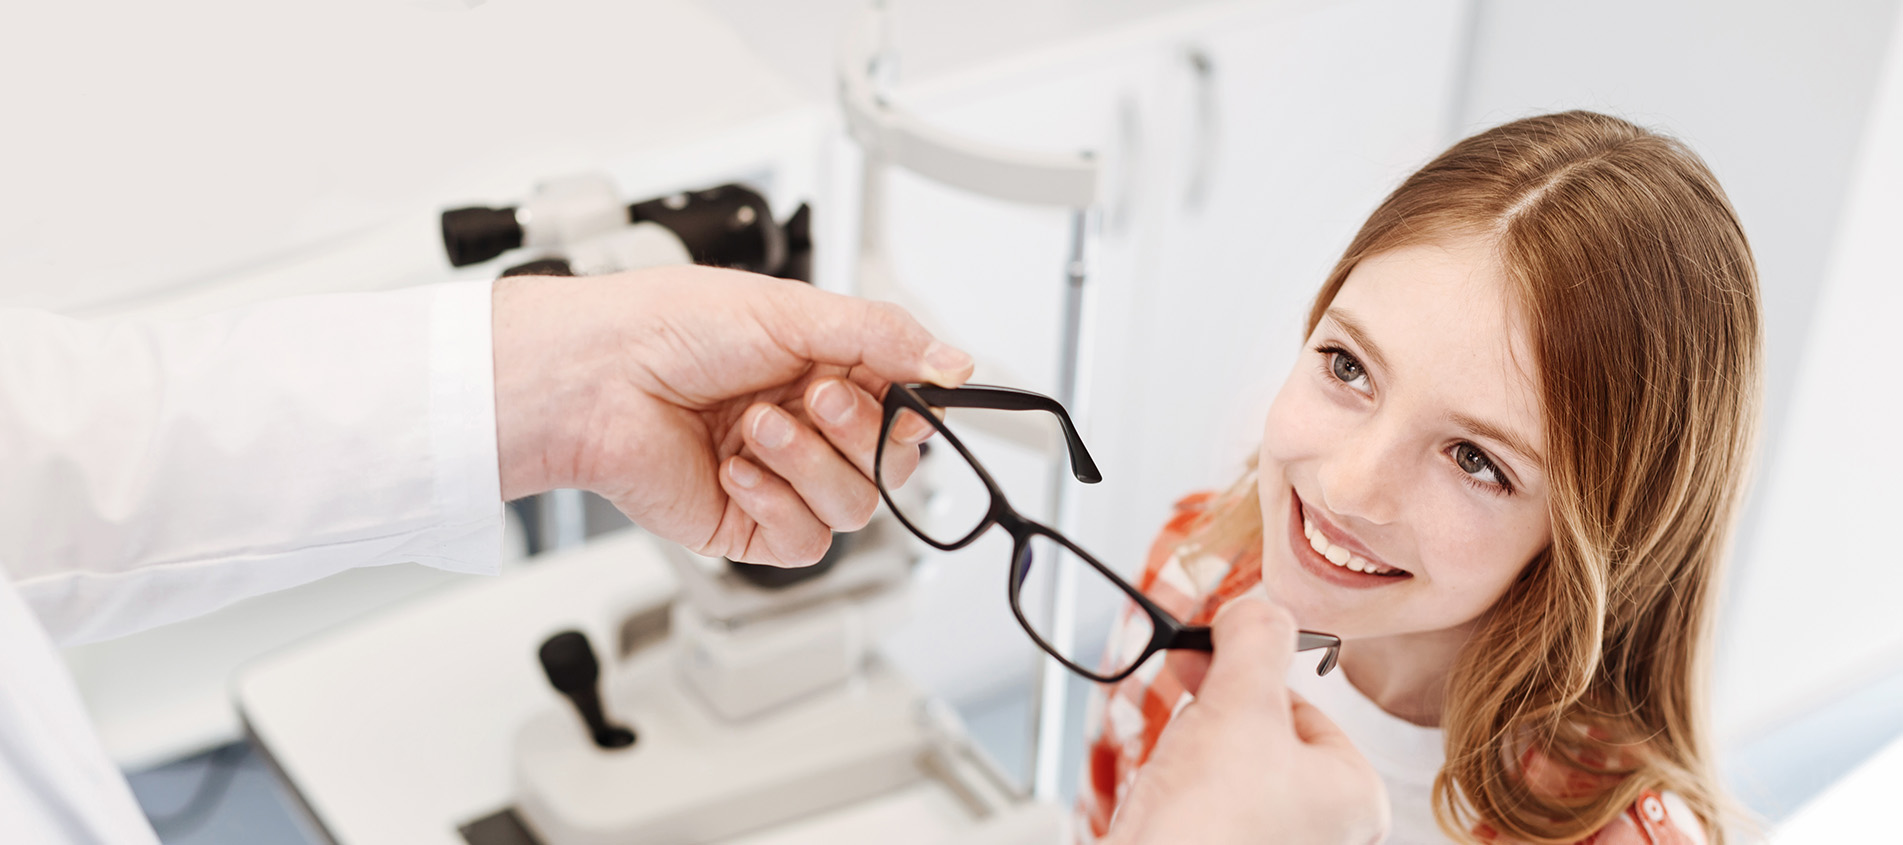 Optometreist Fitting Young Girl With Eyeglasses